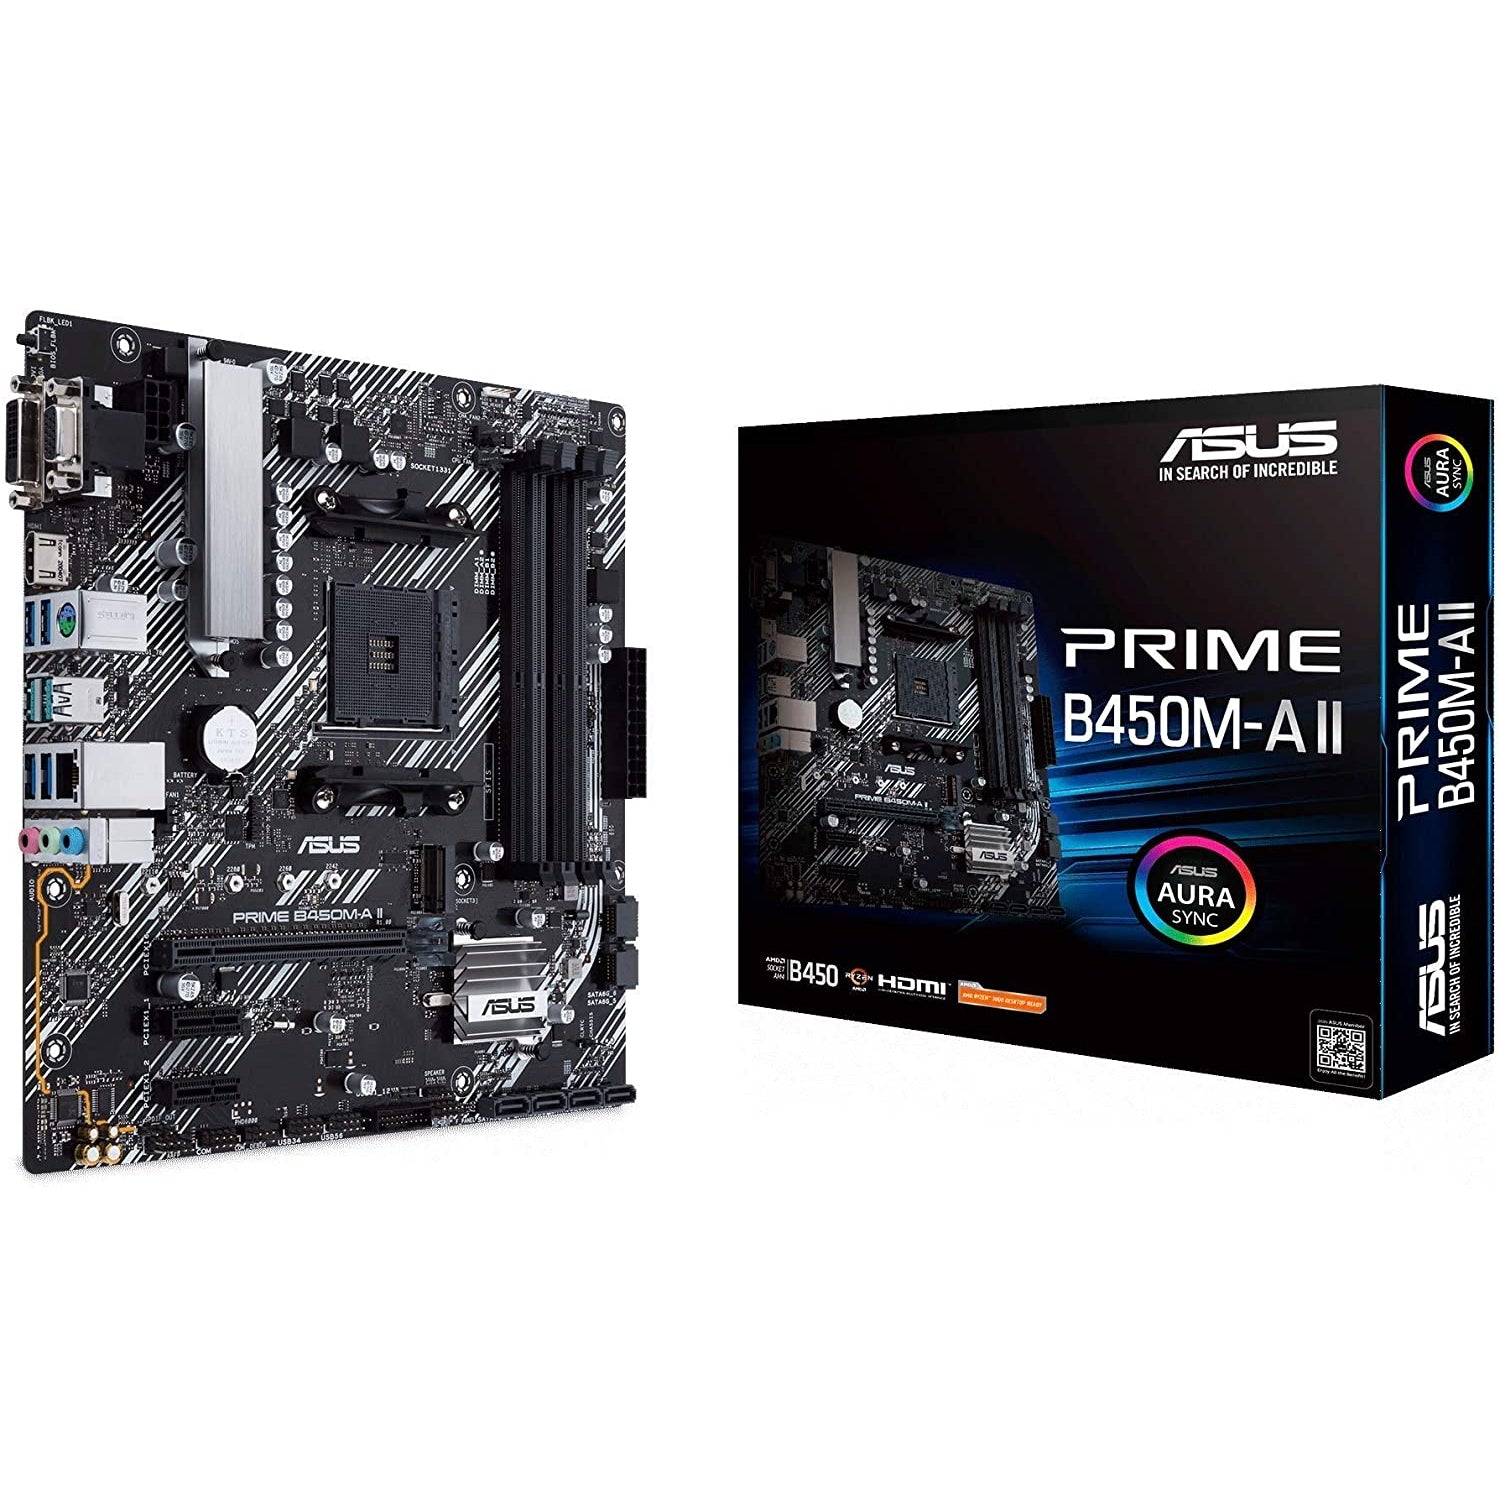 ASUS Prime B450M-A II, AMD AM4, MATX Motherboard